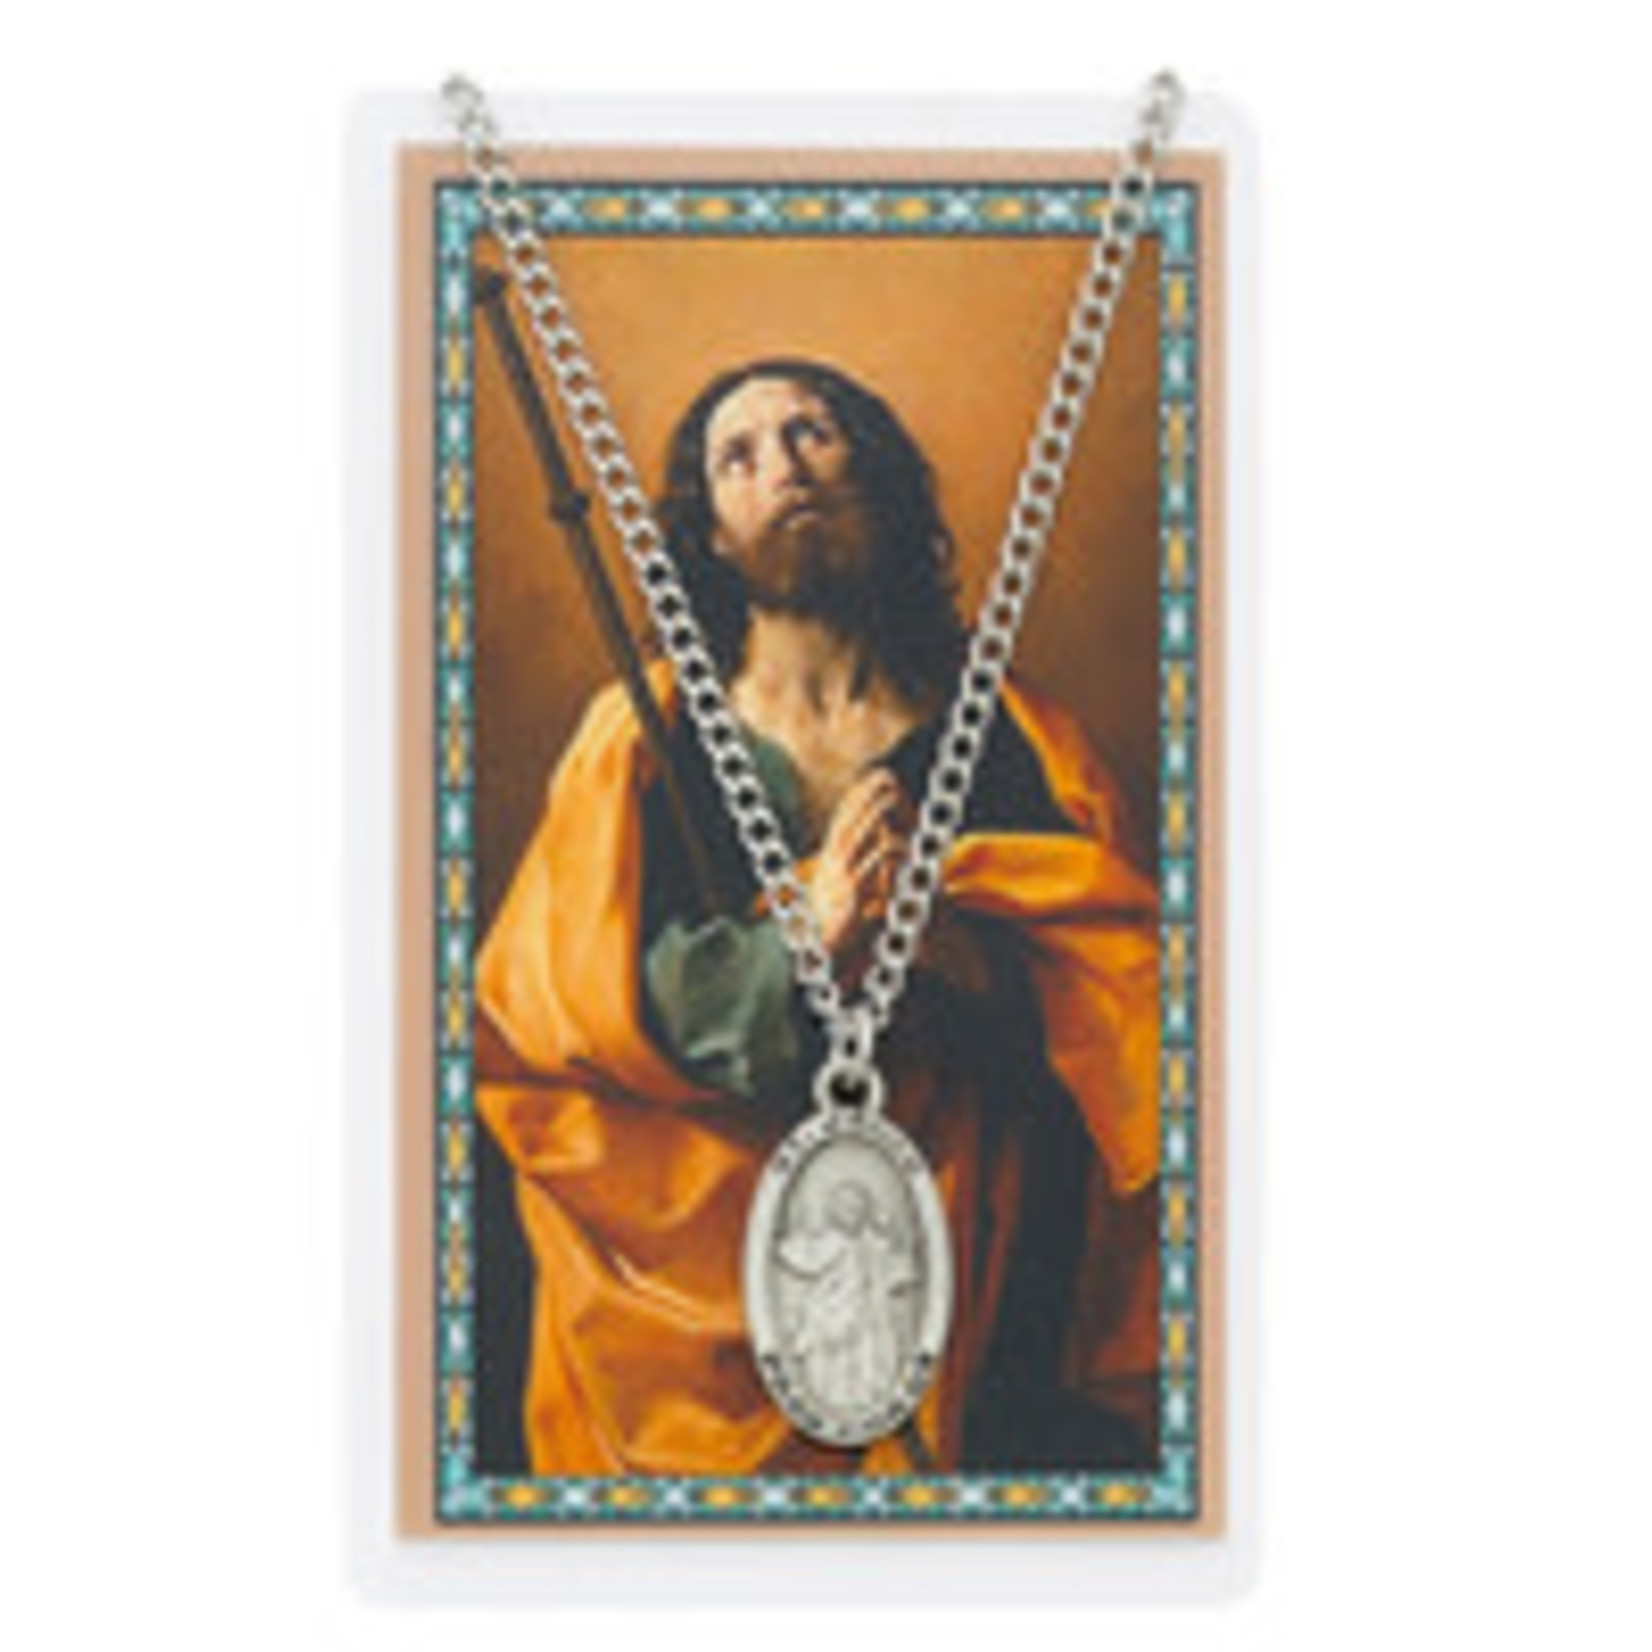 Saint James Medal and Prayer Card Set